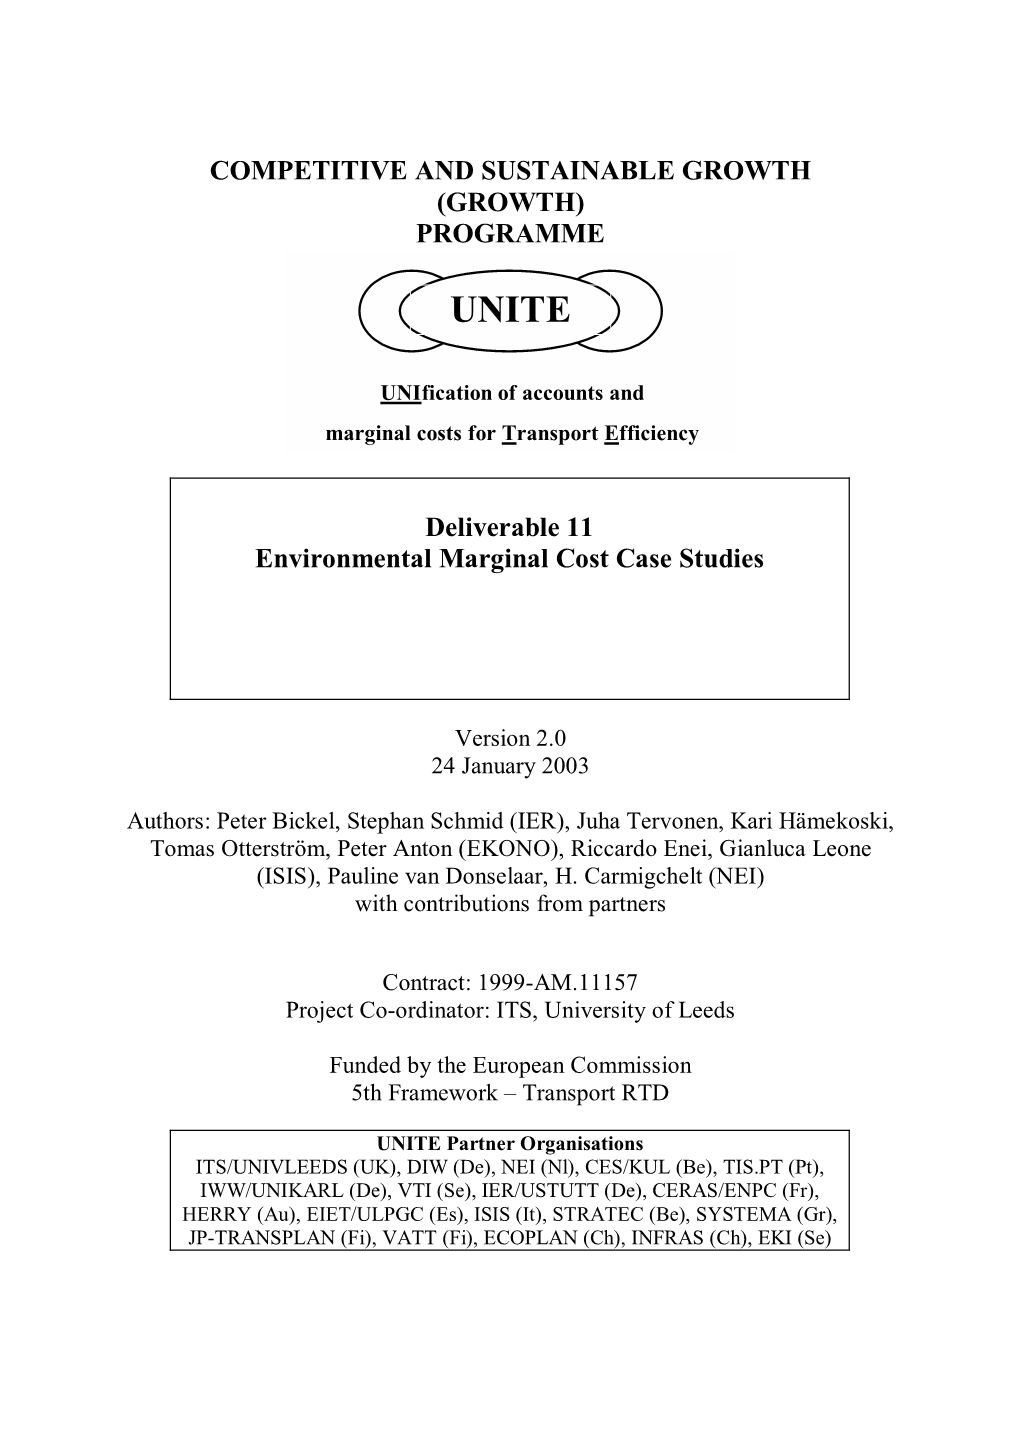 Deliverable 11: Environmental Marginal Cost Case Studies